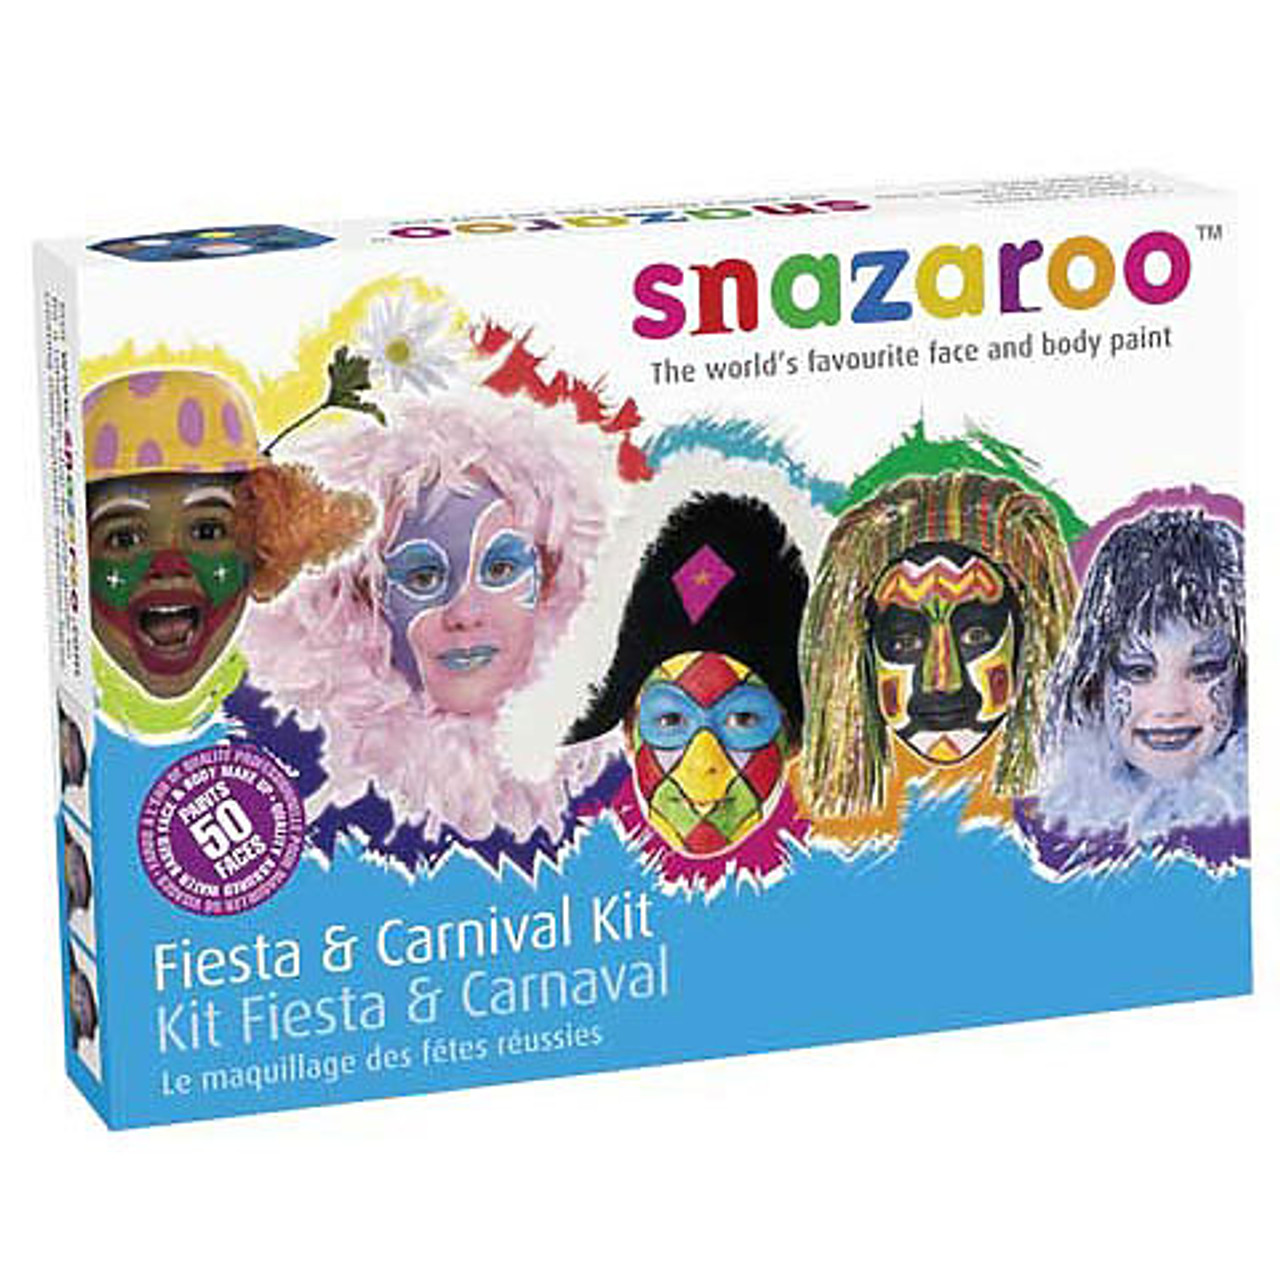 Snazaroo Face Painting Palette Kits - Rainbow (8 Colors) 